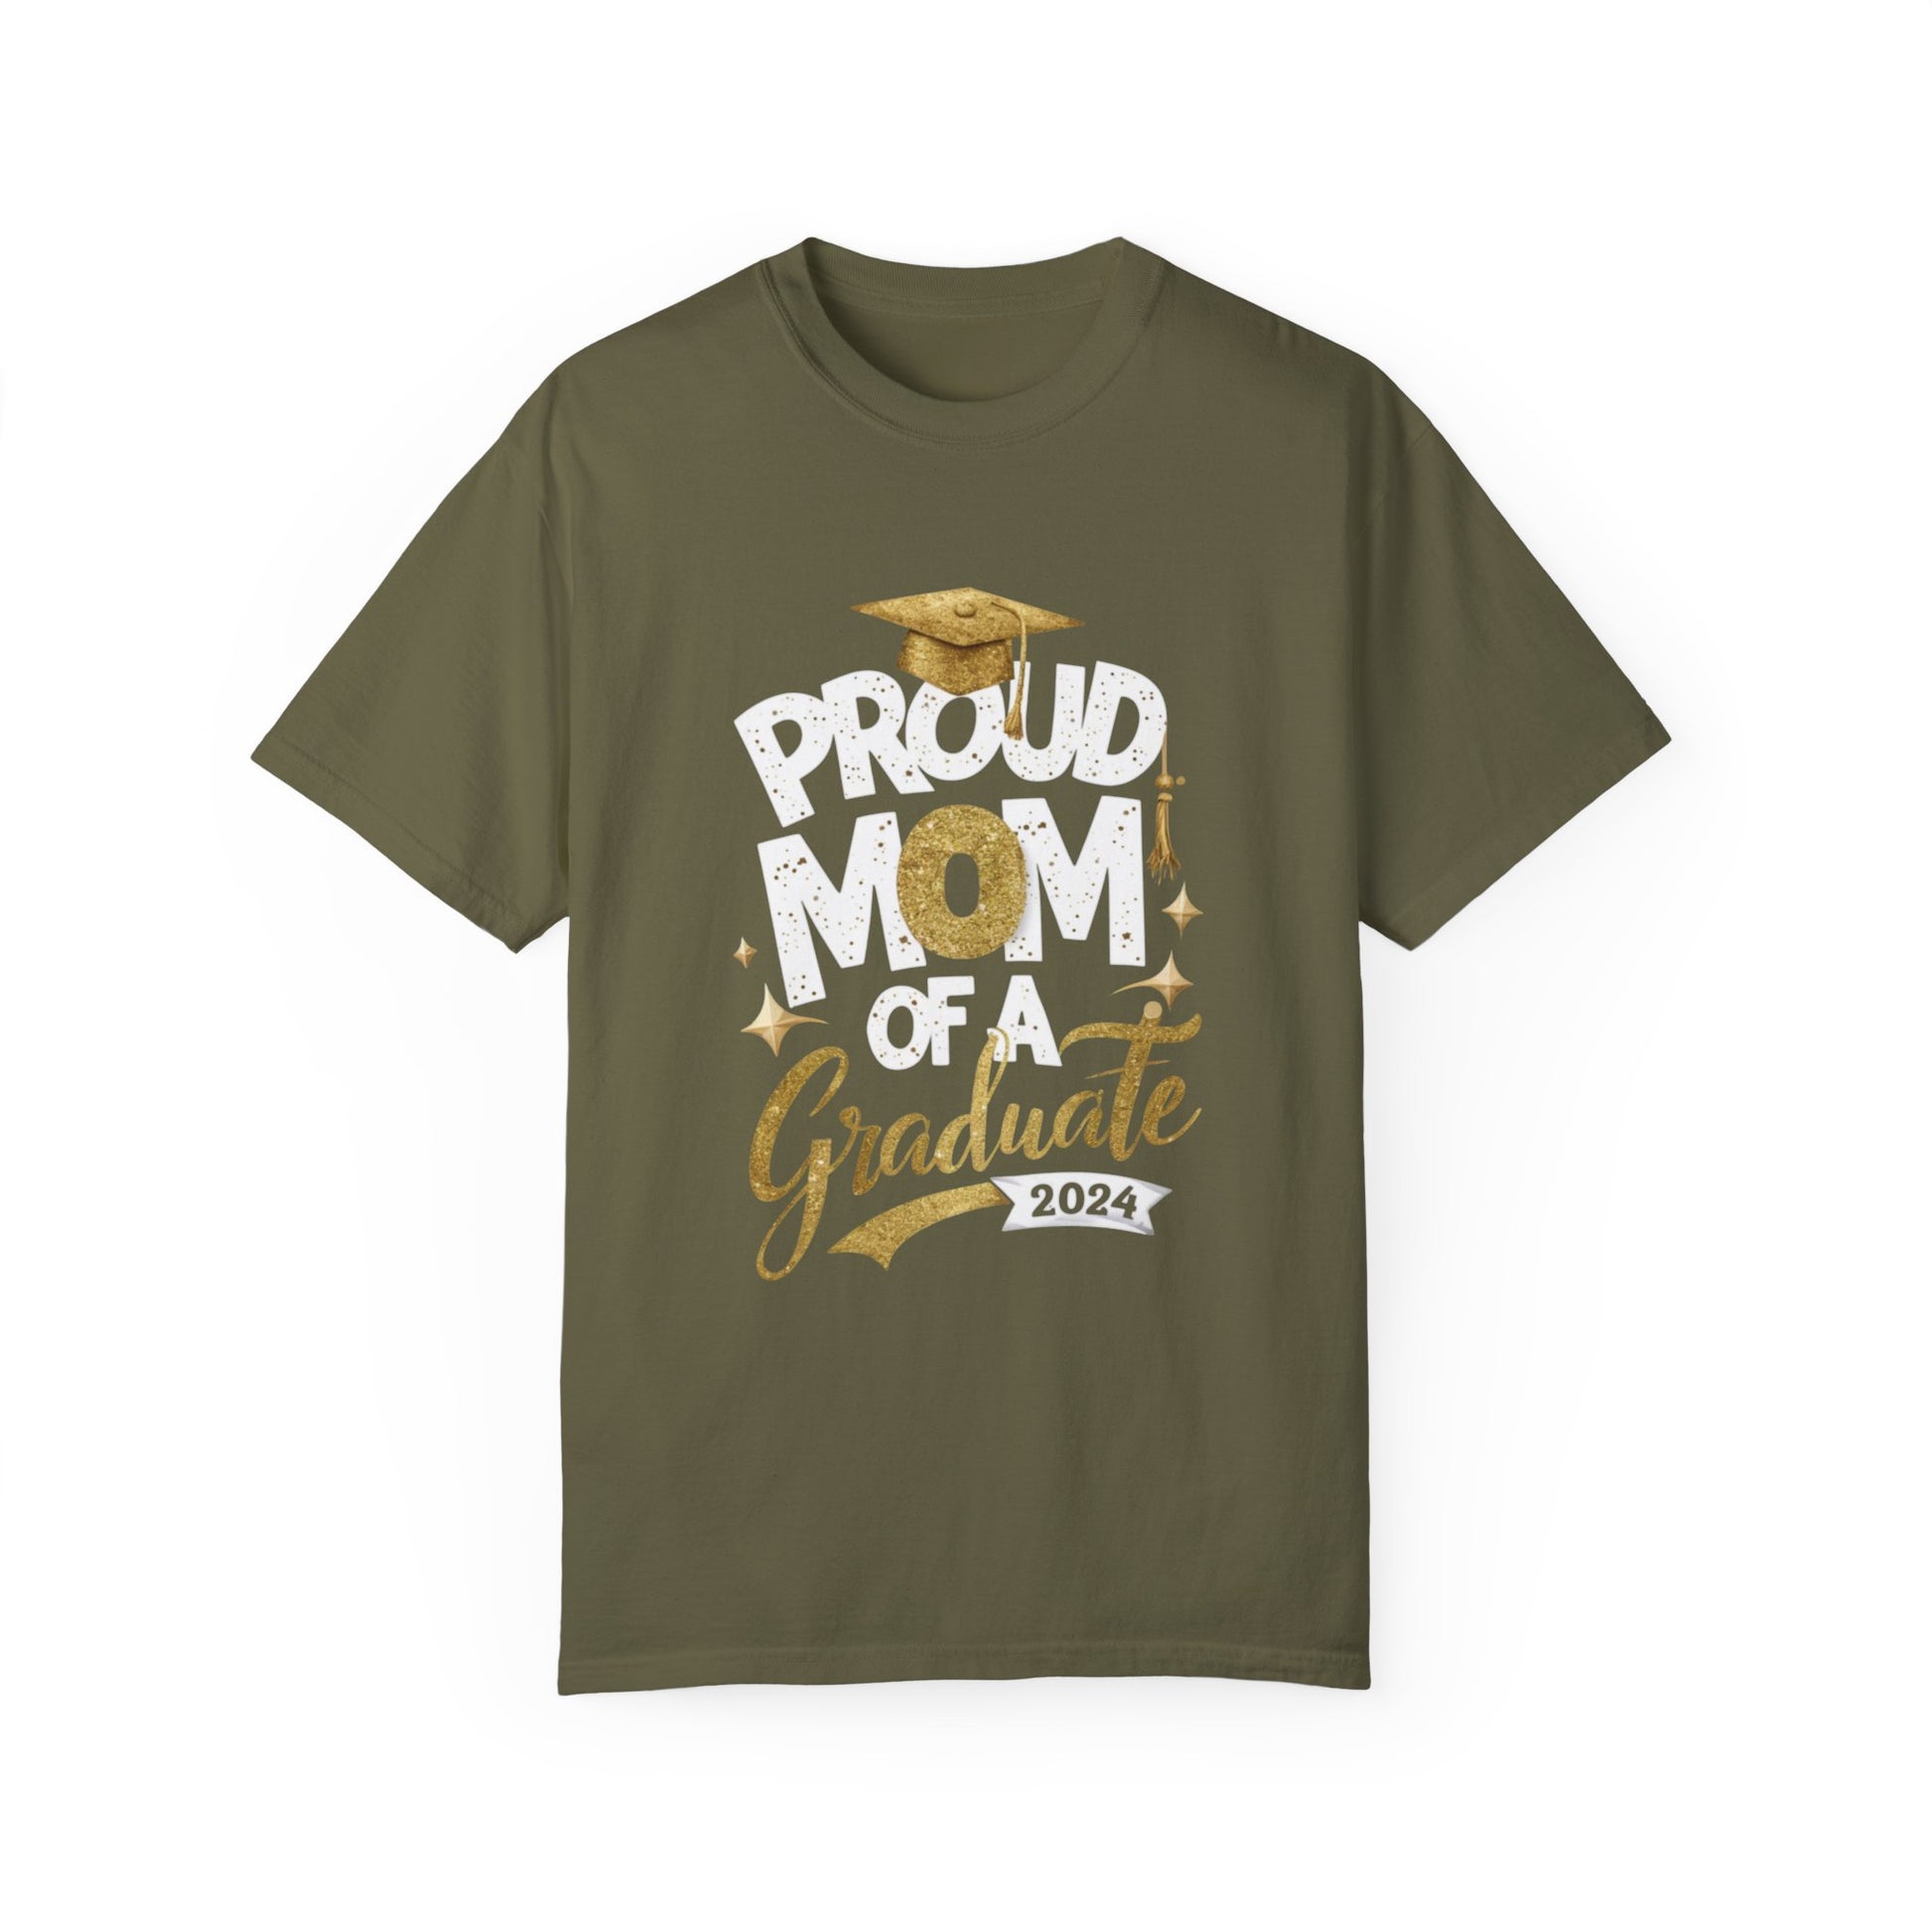 Proud Mom of a 2024 Graduate Unisex Garment-dyed T-shirt Cotton Funny Humorous Graphic Soft Premium Unisex Men Women Sage T-shirt Birthday Gift-13